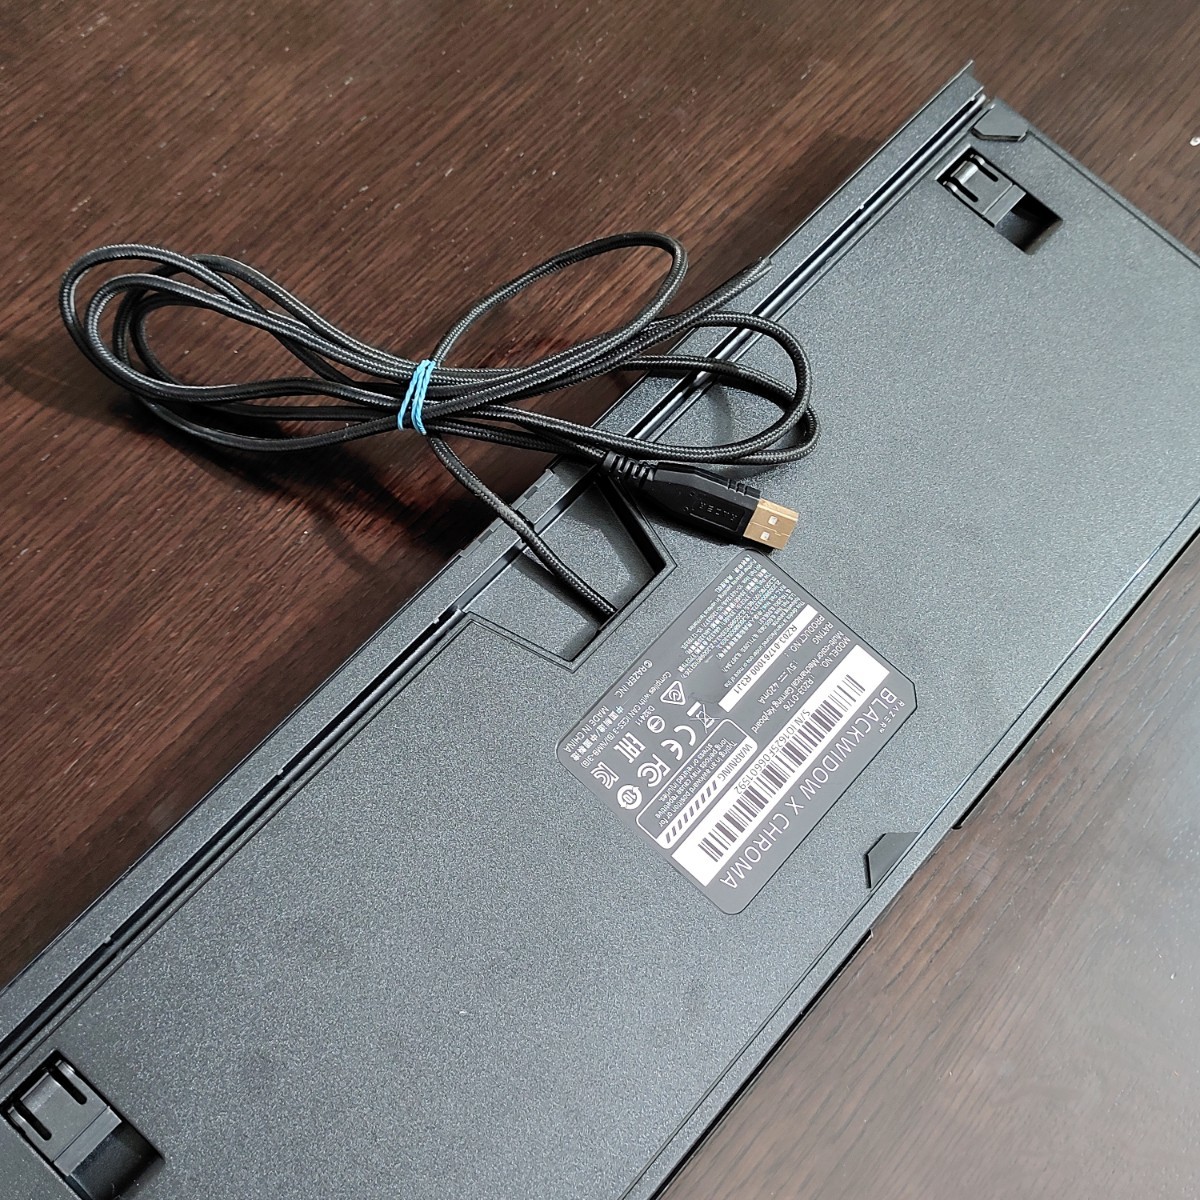 【Razer】BlackWidow X Chroma JP 日本語配列版 マルチライティングゲーミングキーボード 有線 多機能 レイザー RZ03-01761000-R3J1